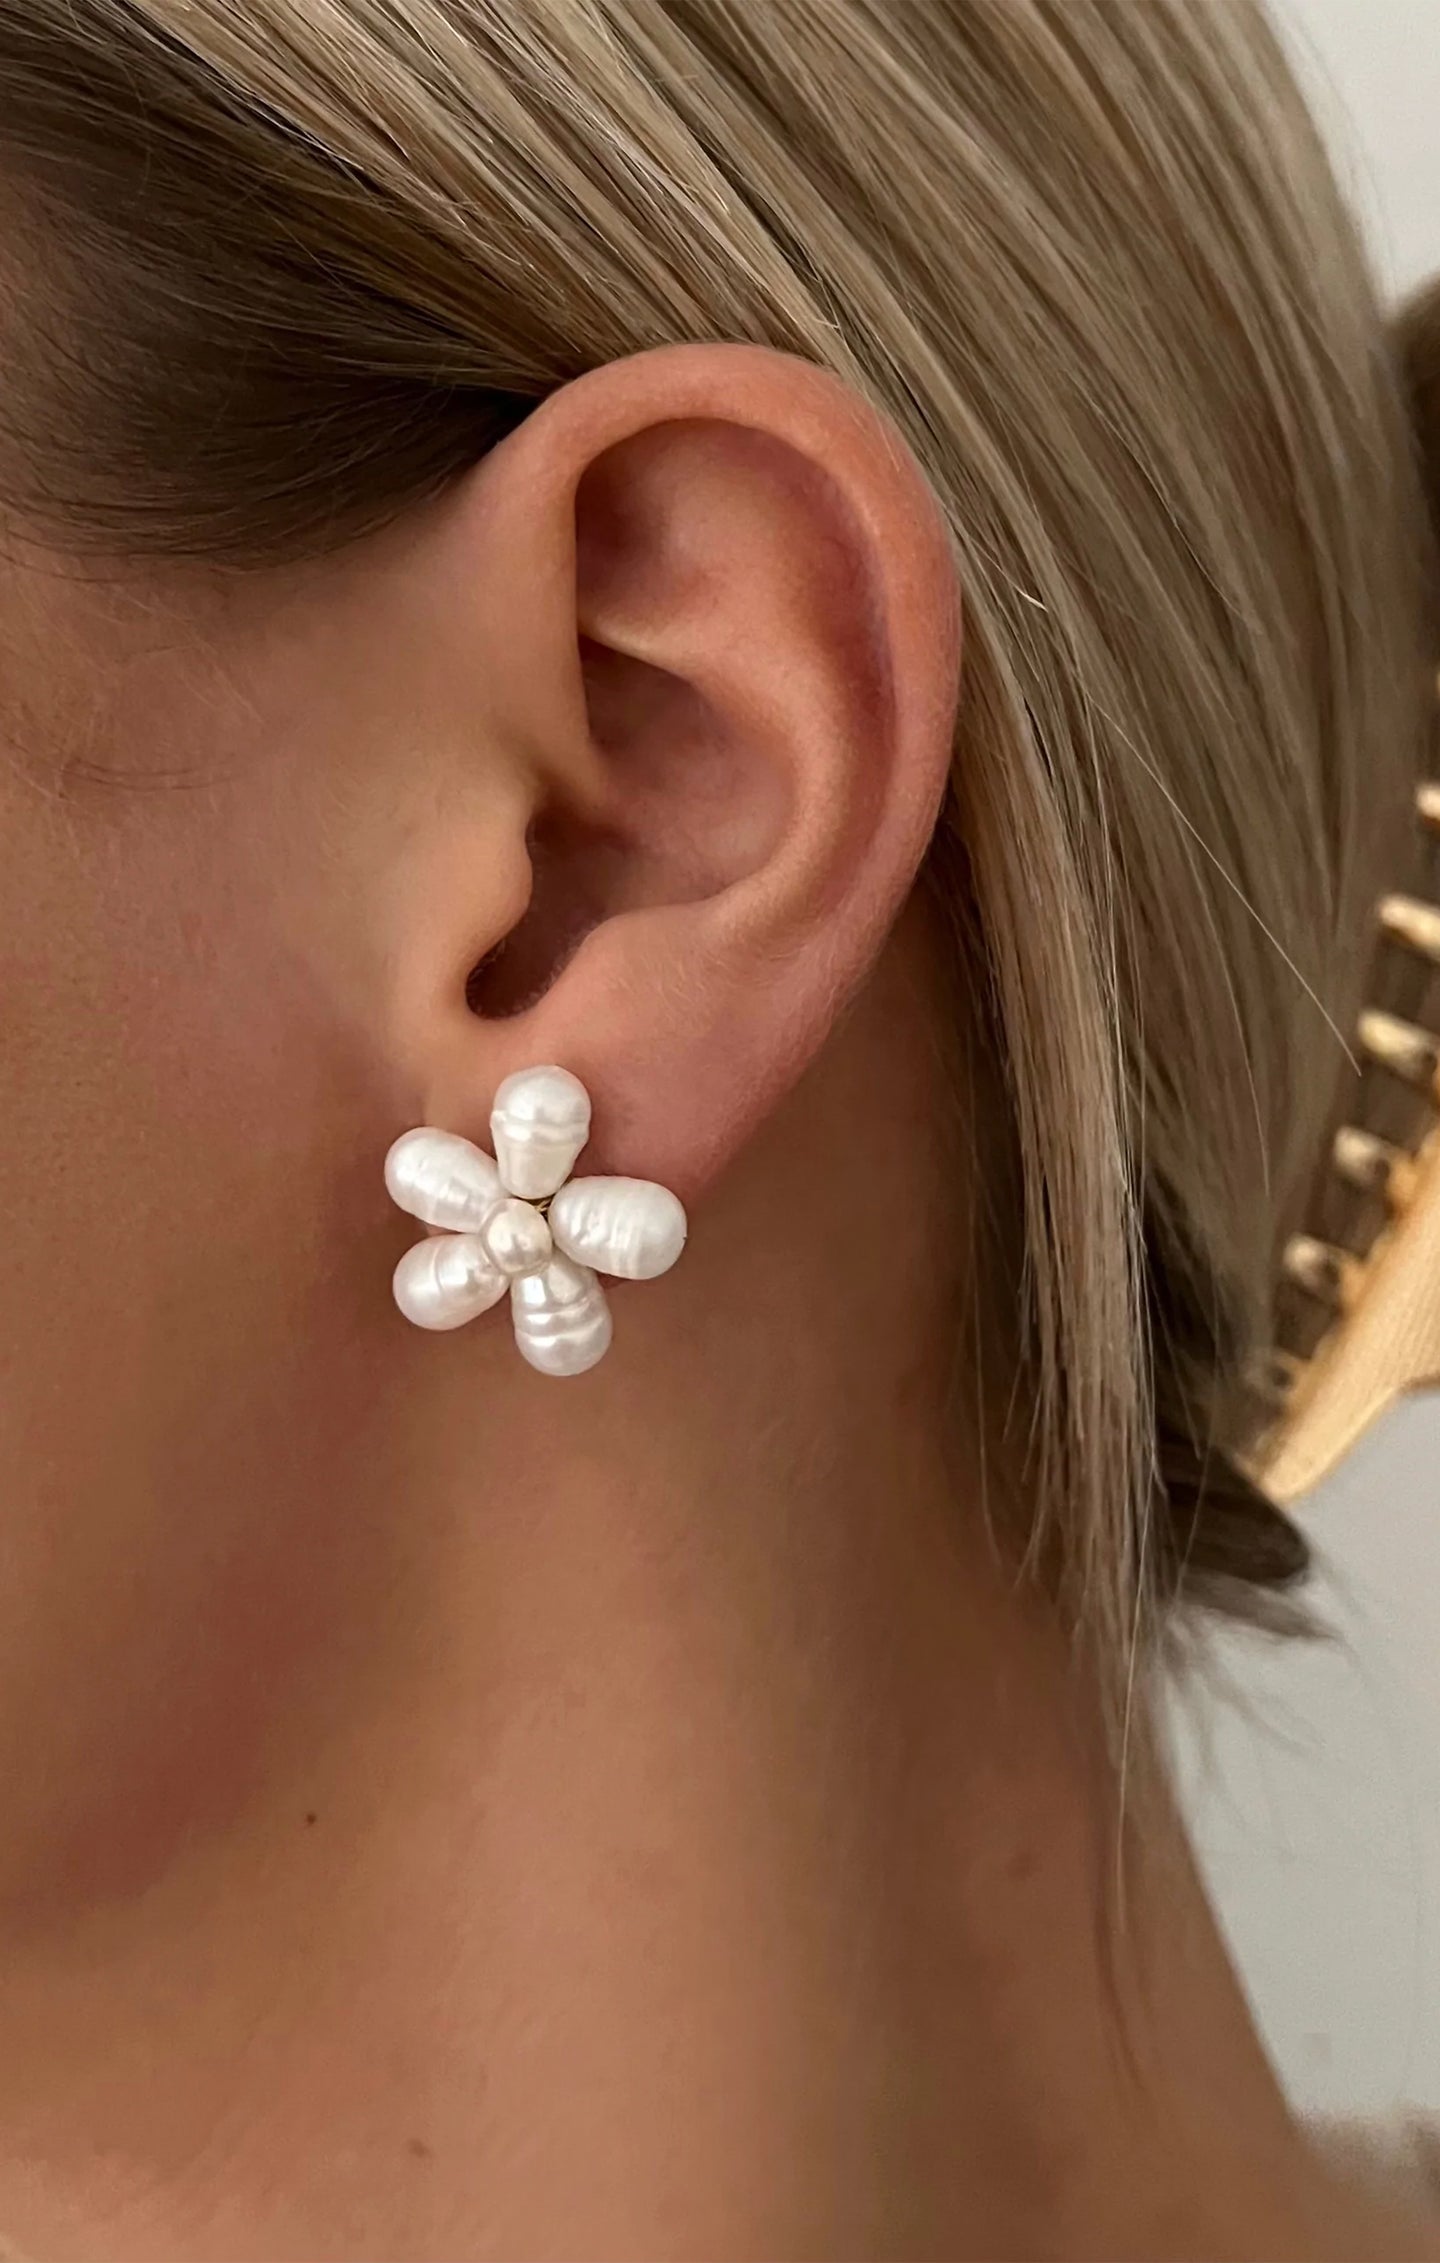 Blossom Stud Earrings